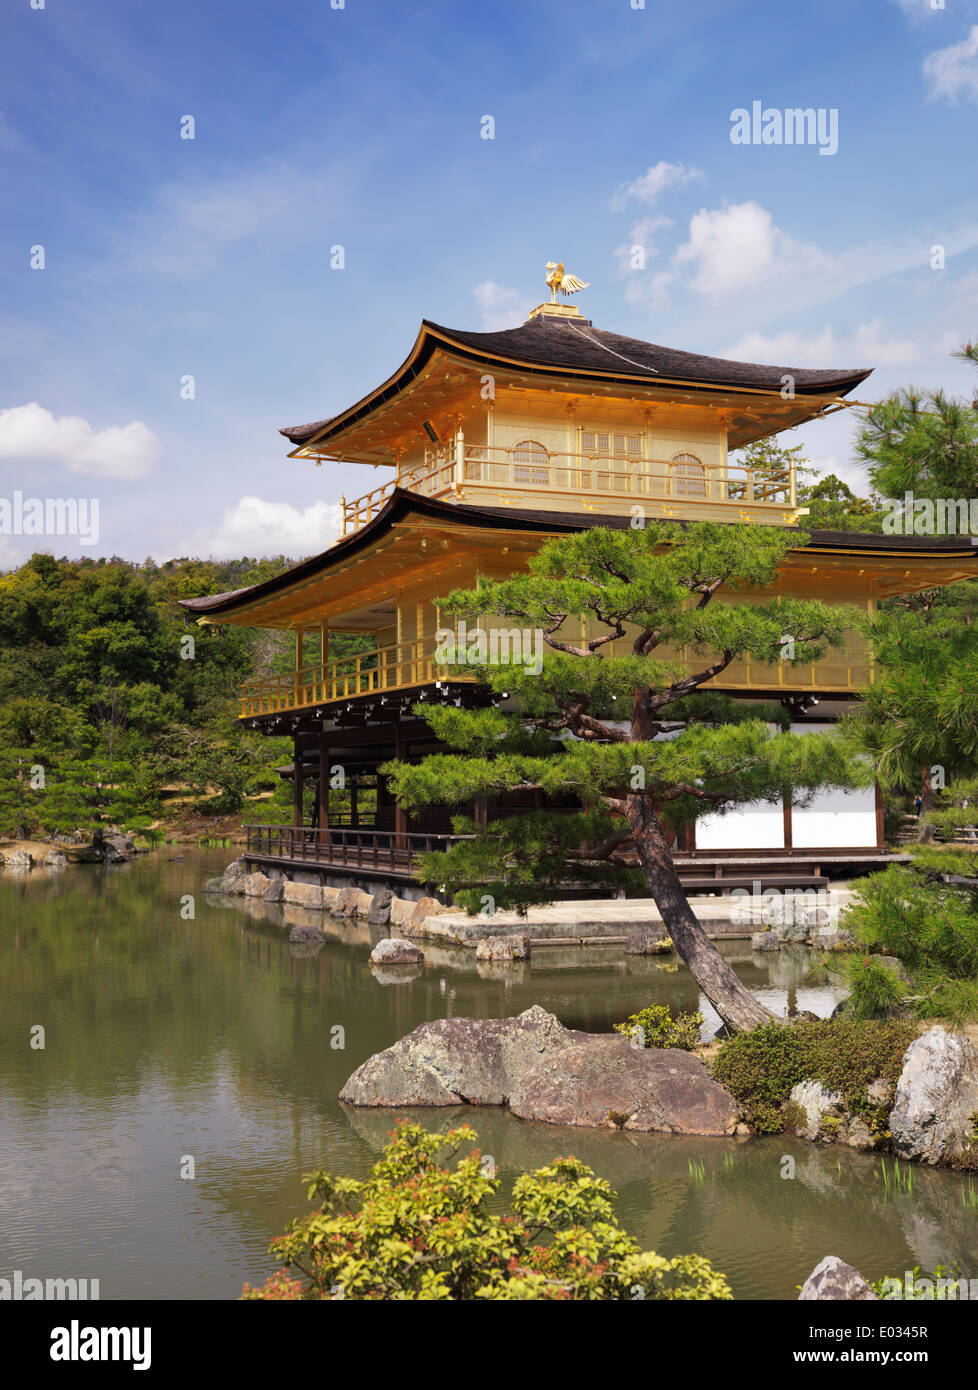 Lizenz und Drucke bei MaximImages.com - Kinkaku-ji Tempel des Goldenen Pavillons mit japanischem Teichgarten. Rokuon-ji, Zen-buddhistischer Tempel Kyoto Japan Stockfoto